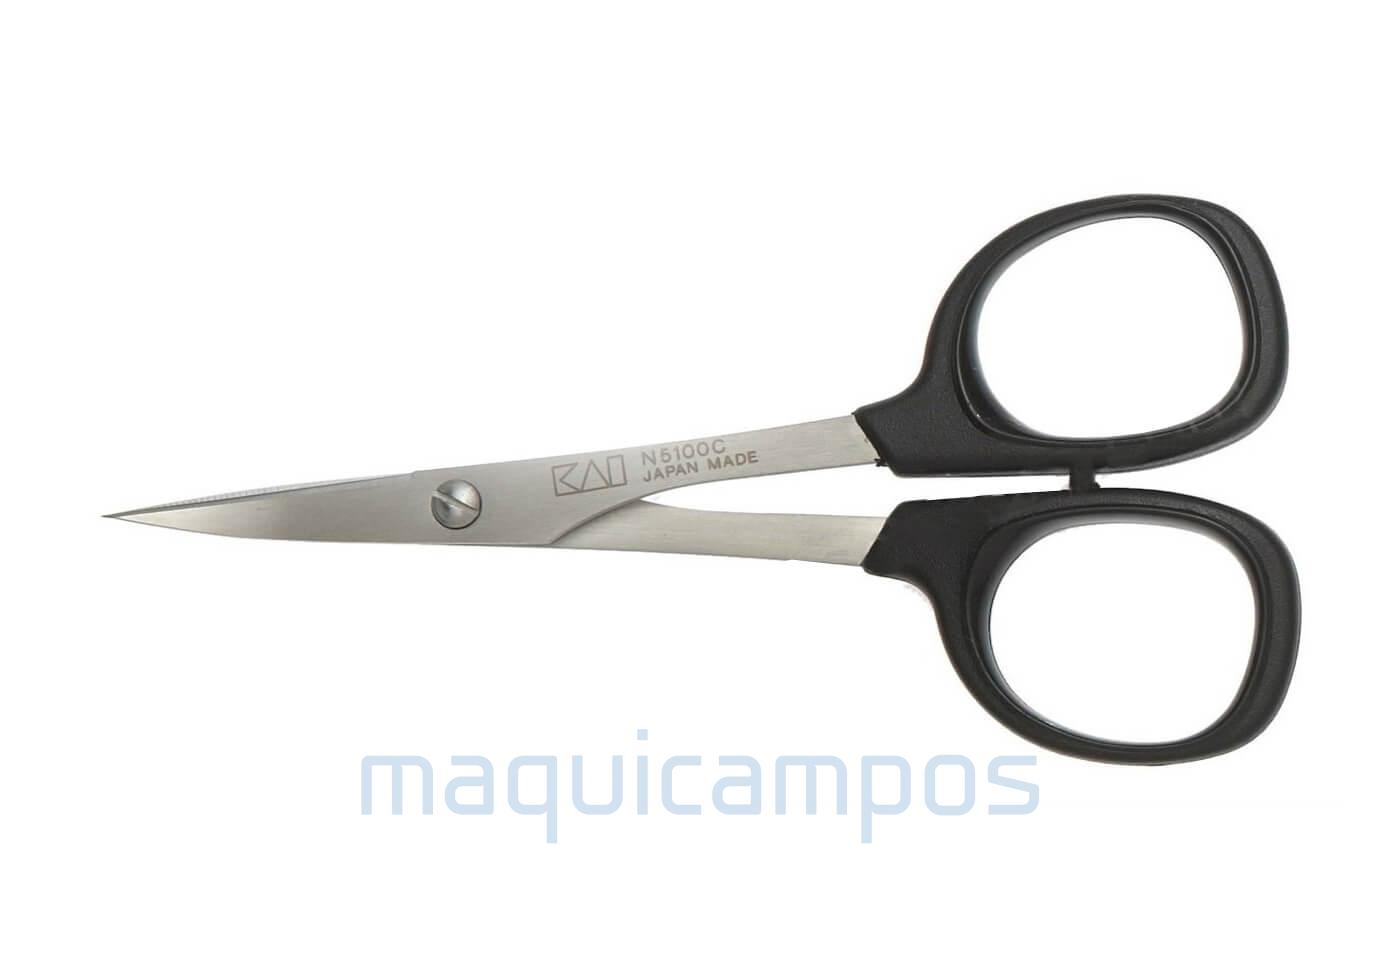 Kai N5100C Curved Sewing Scissor 4" (10cm)